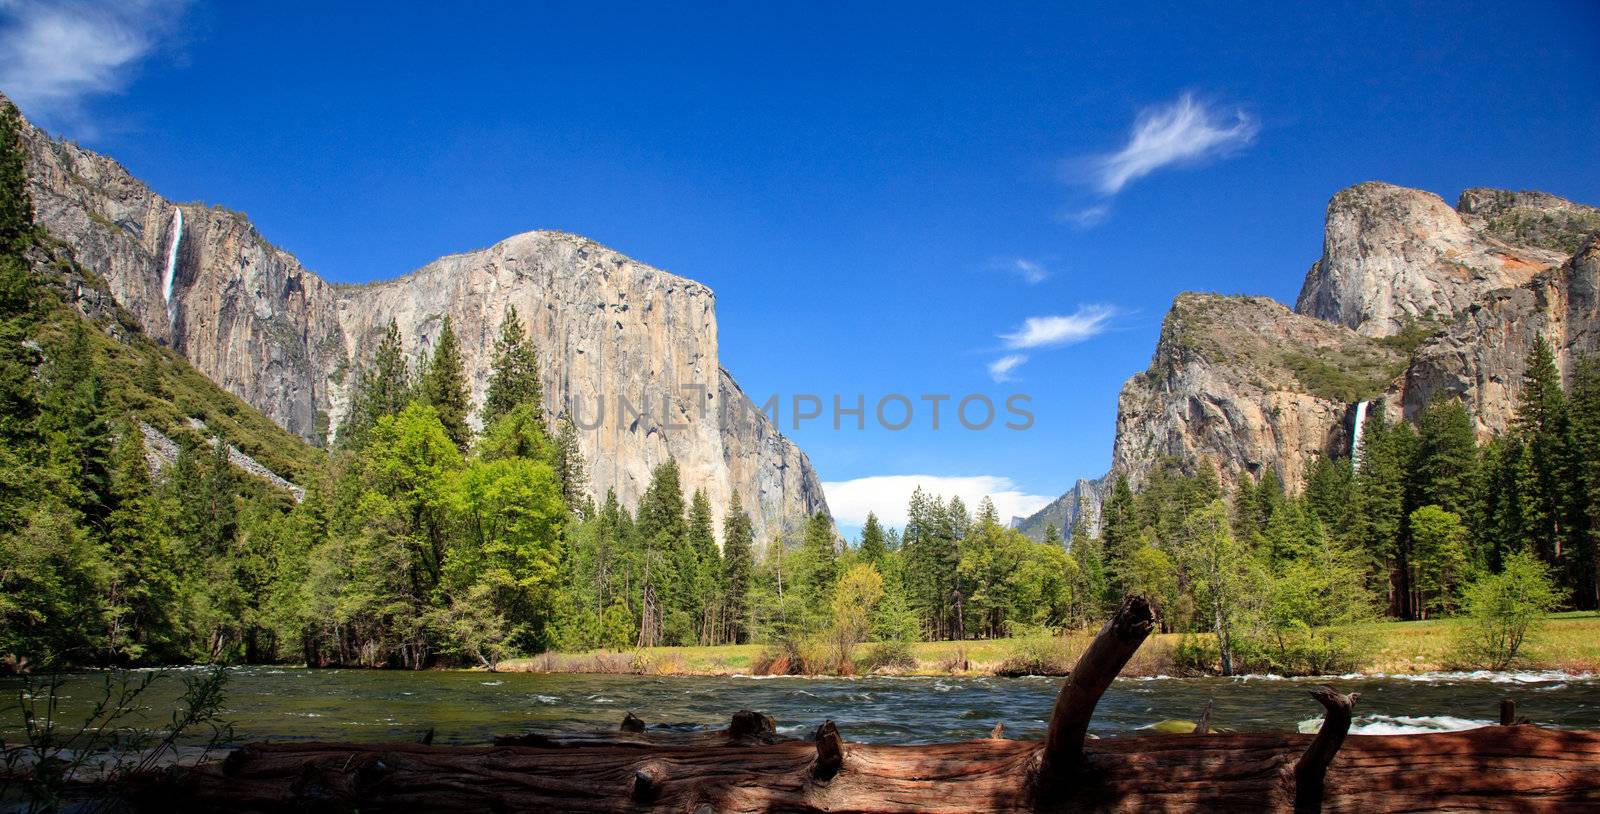 Log framing Yosemite Valley by steheap